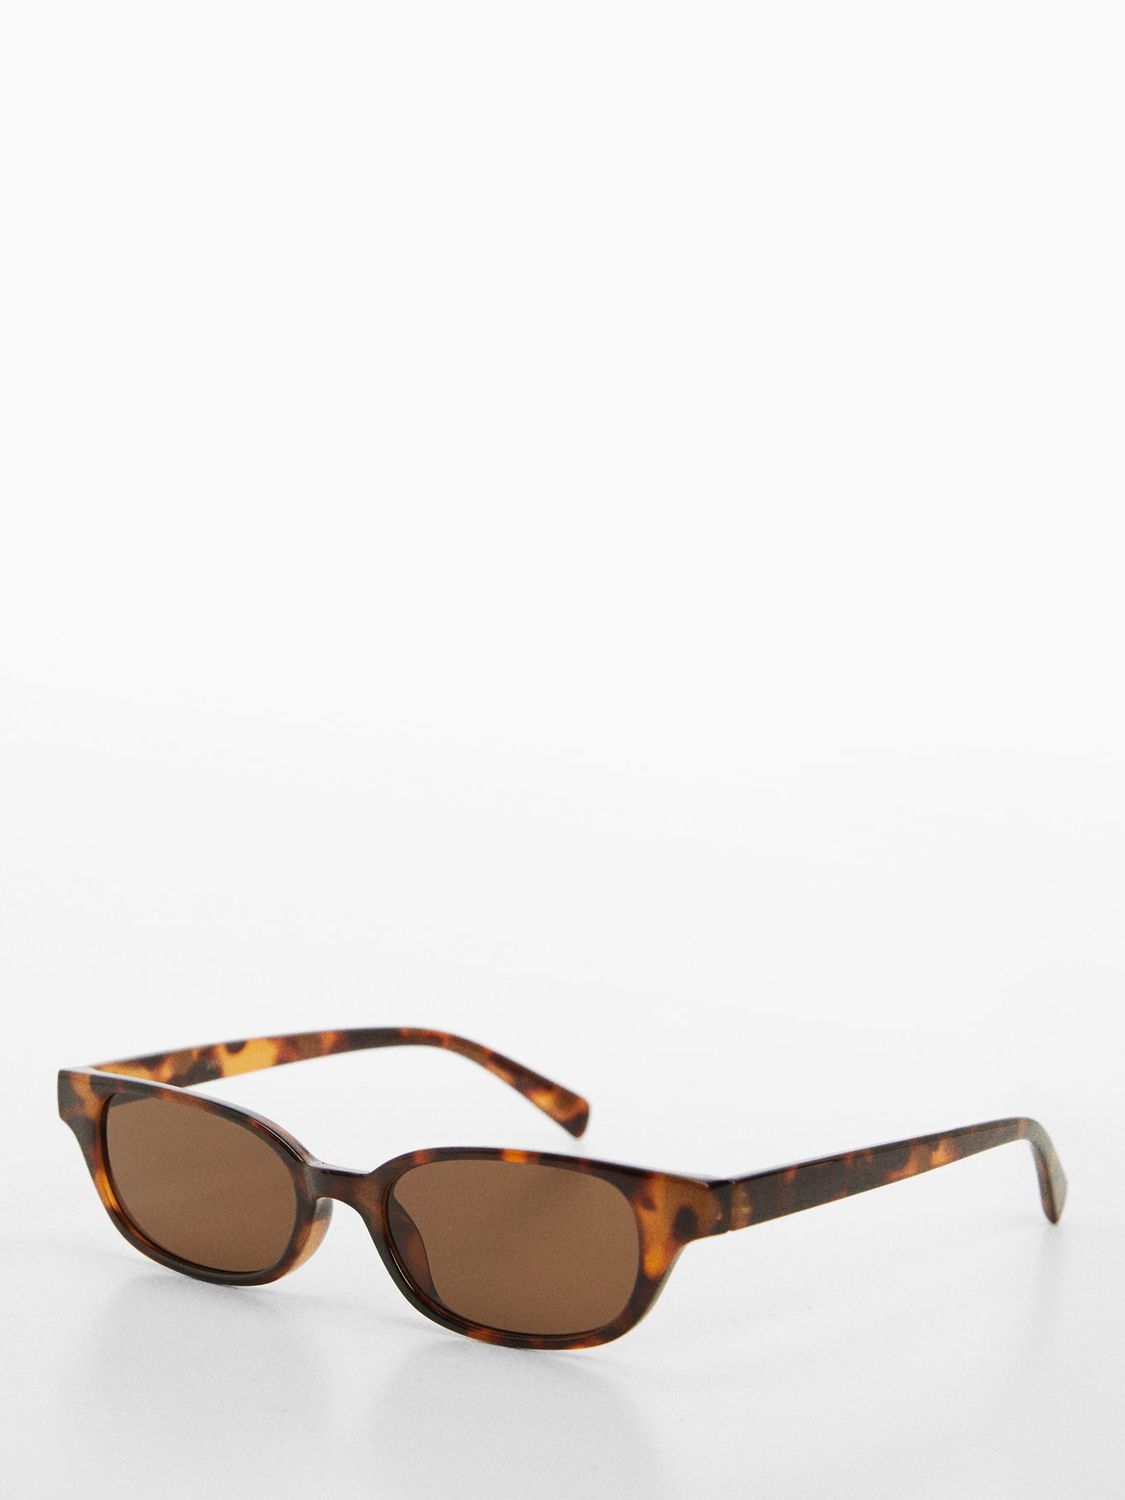 Mango Women's Fidela Retro Sunglasses, Dark Brown, One Size